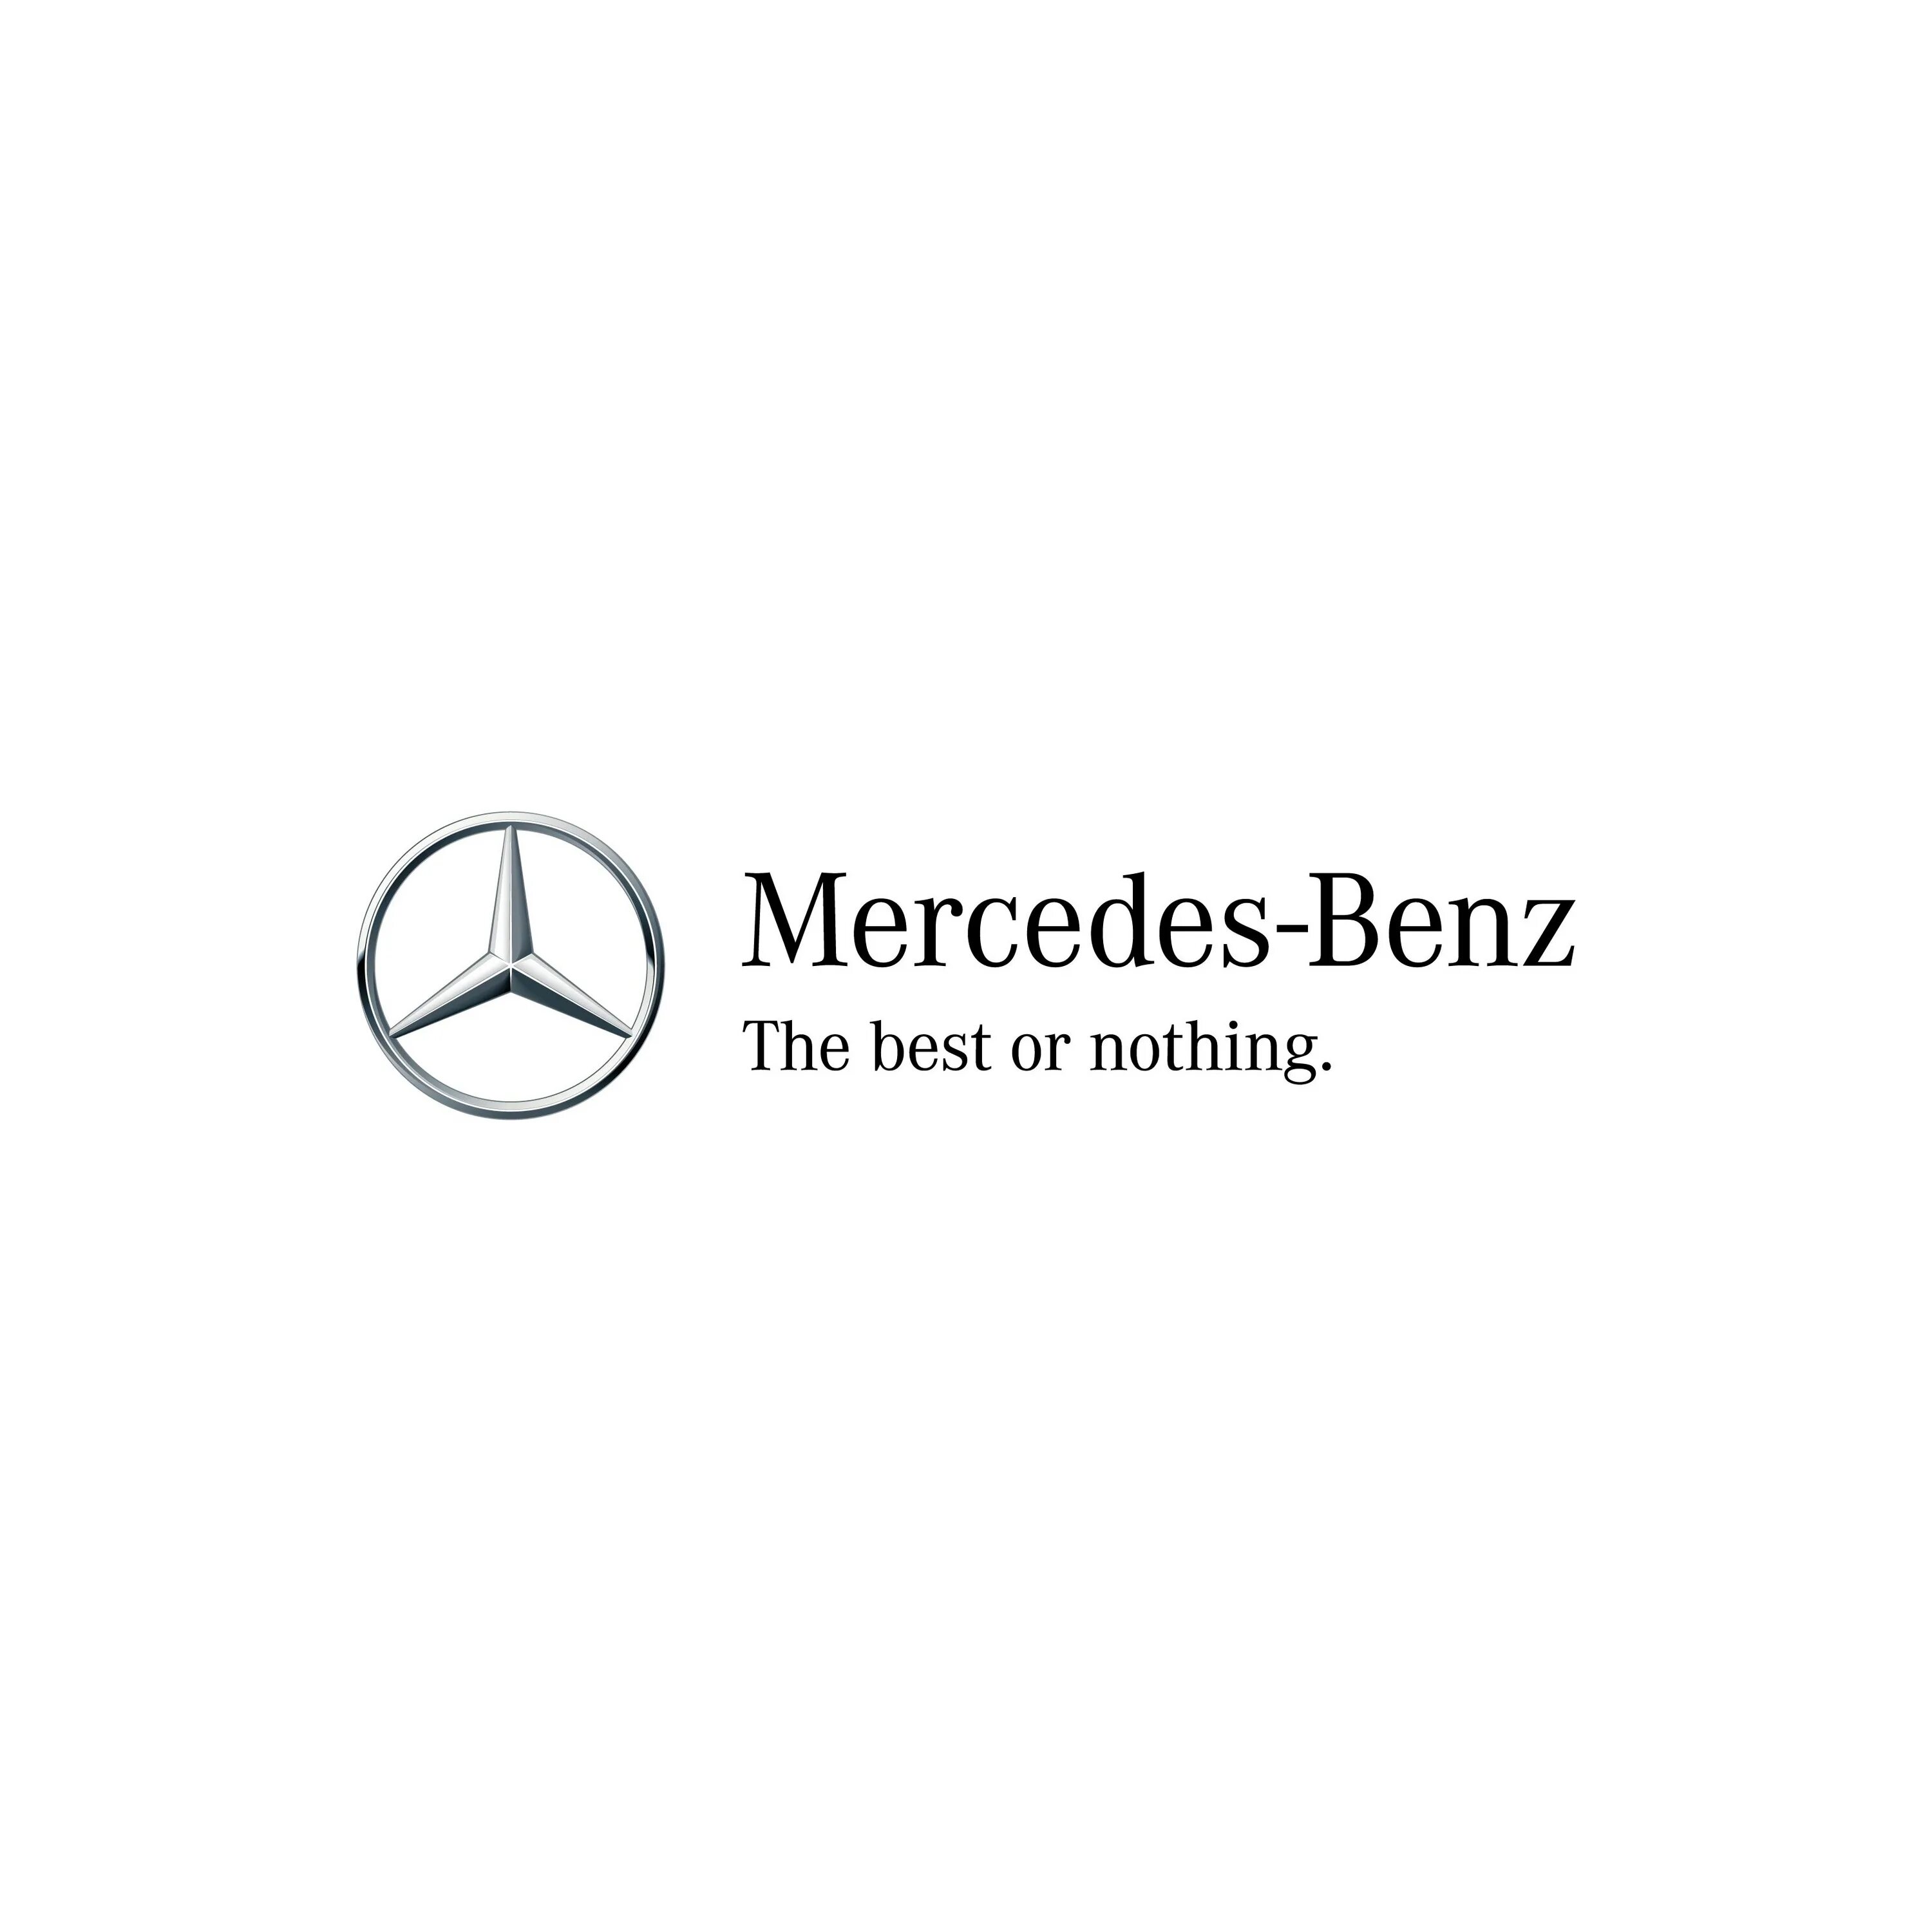 Слоган мерседес. Мерседес Бенц the best or nothing. Слоган Mercedes-Benz. Слоган Мерседес Бенц. The best or nothing слоган Мерседес.